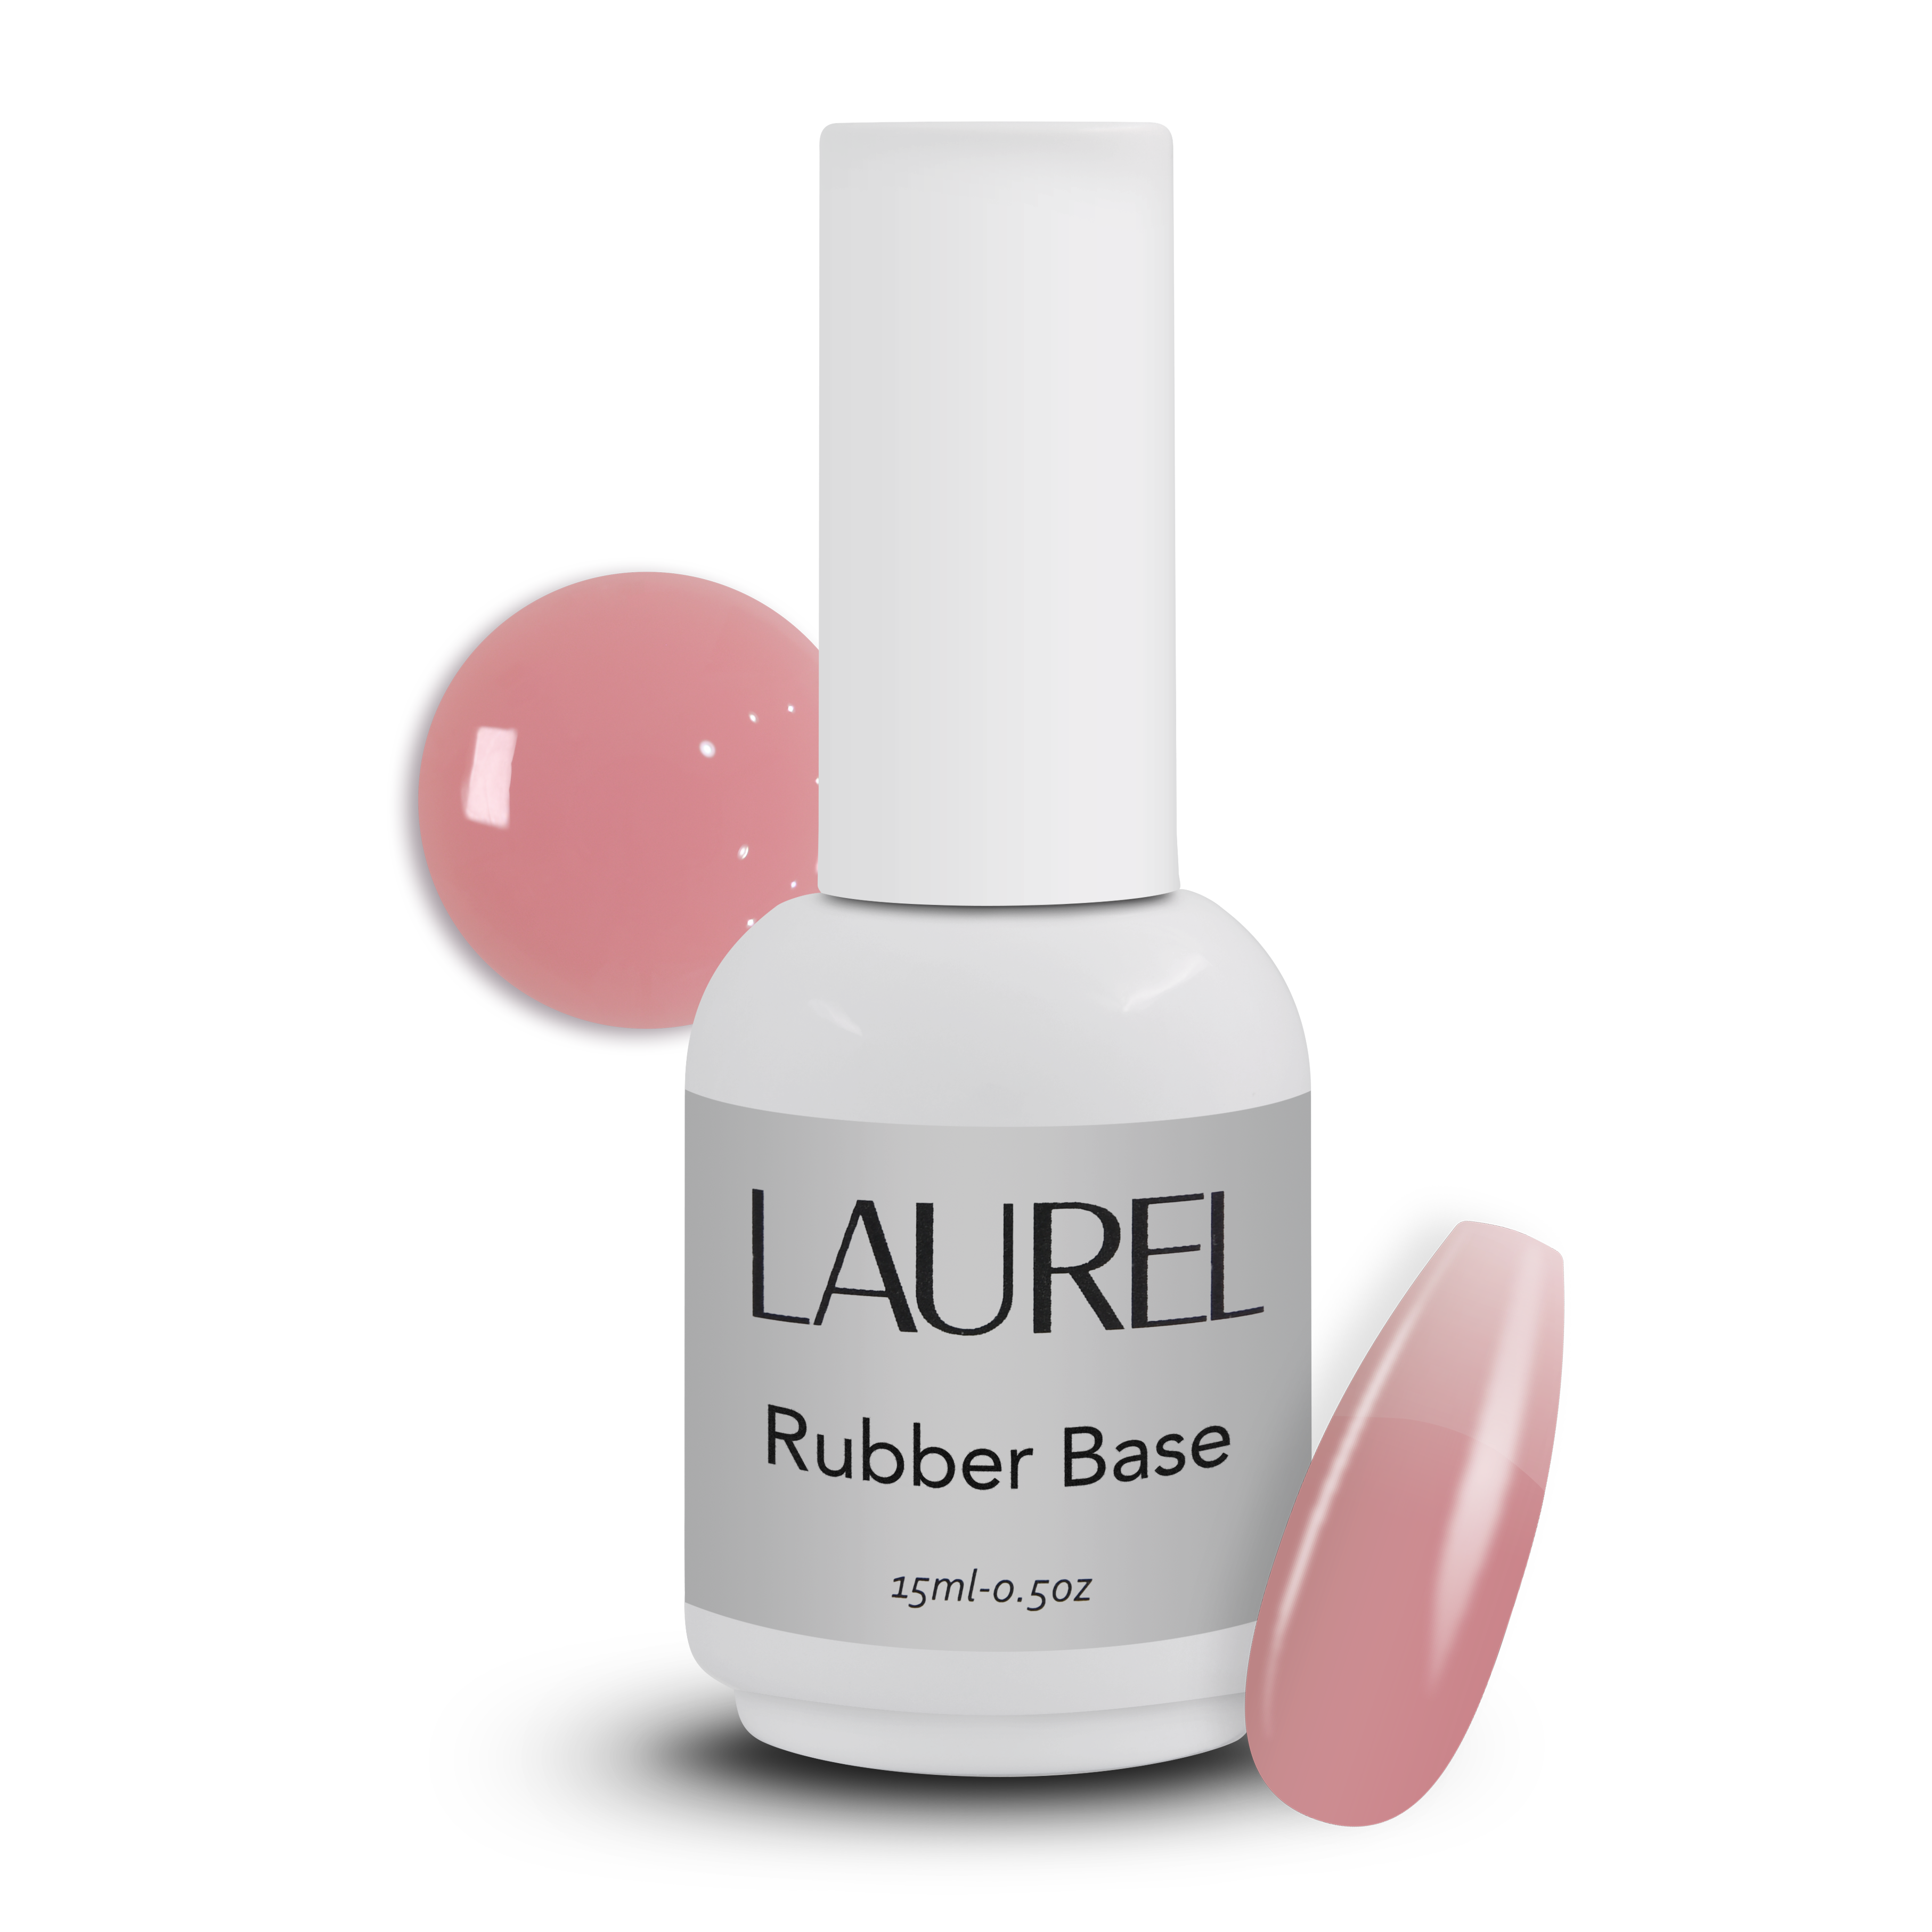 Laurel Rubber Base Strawberry Pink